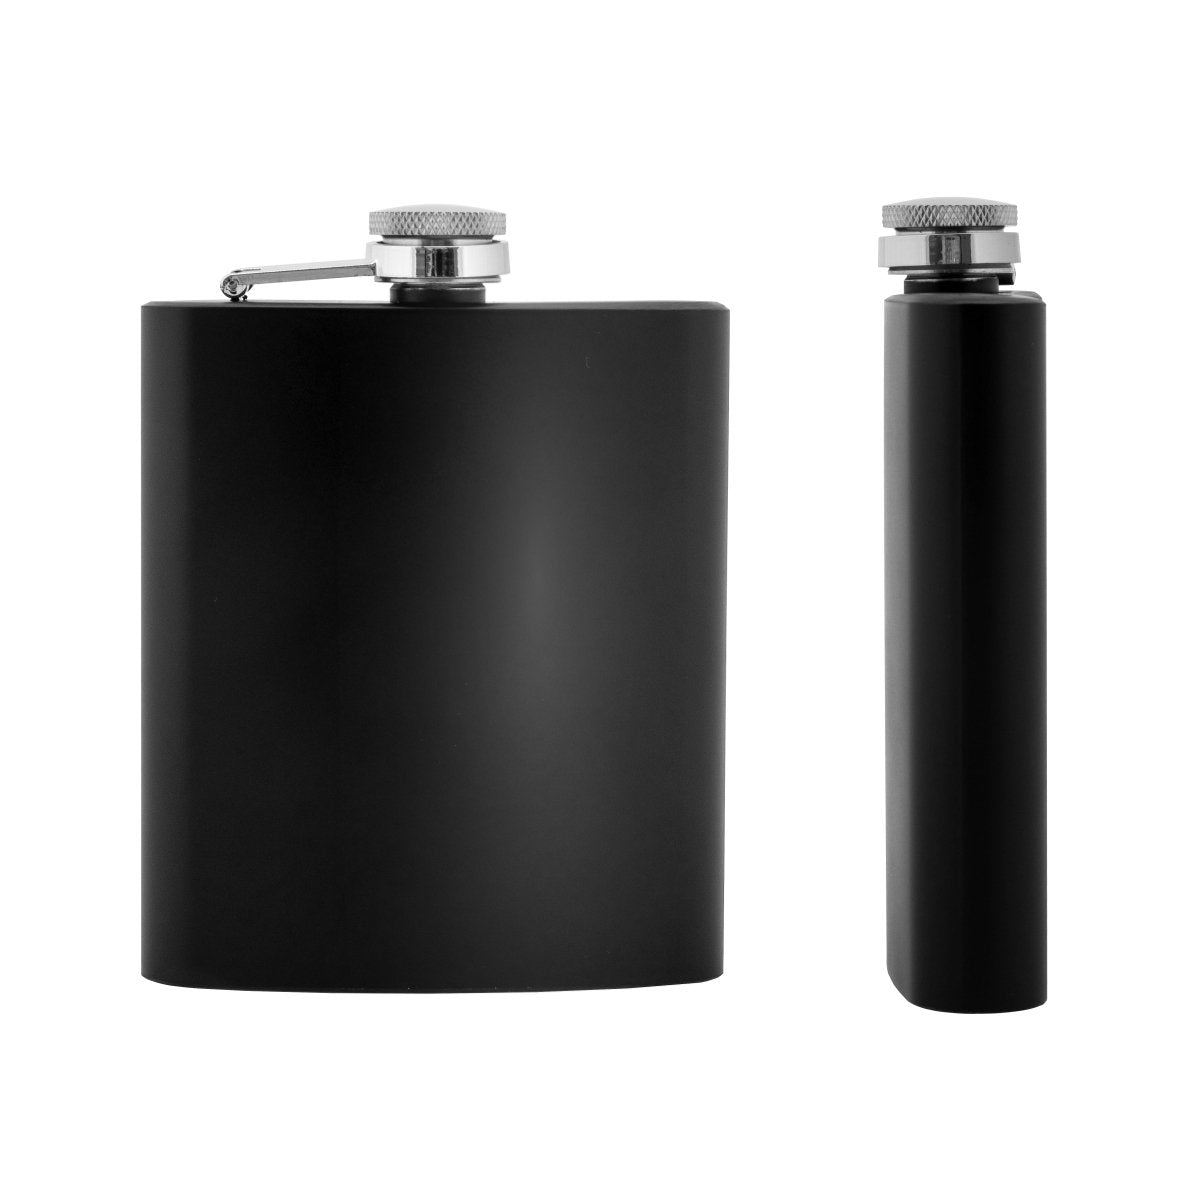 Stainless Steel Hip Flask for Liquor, Black, 7 oz, Set of 4